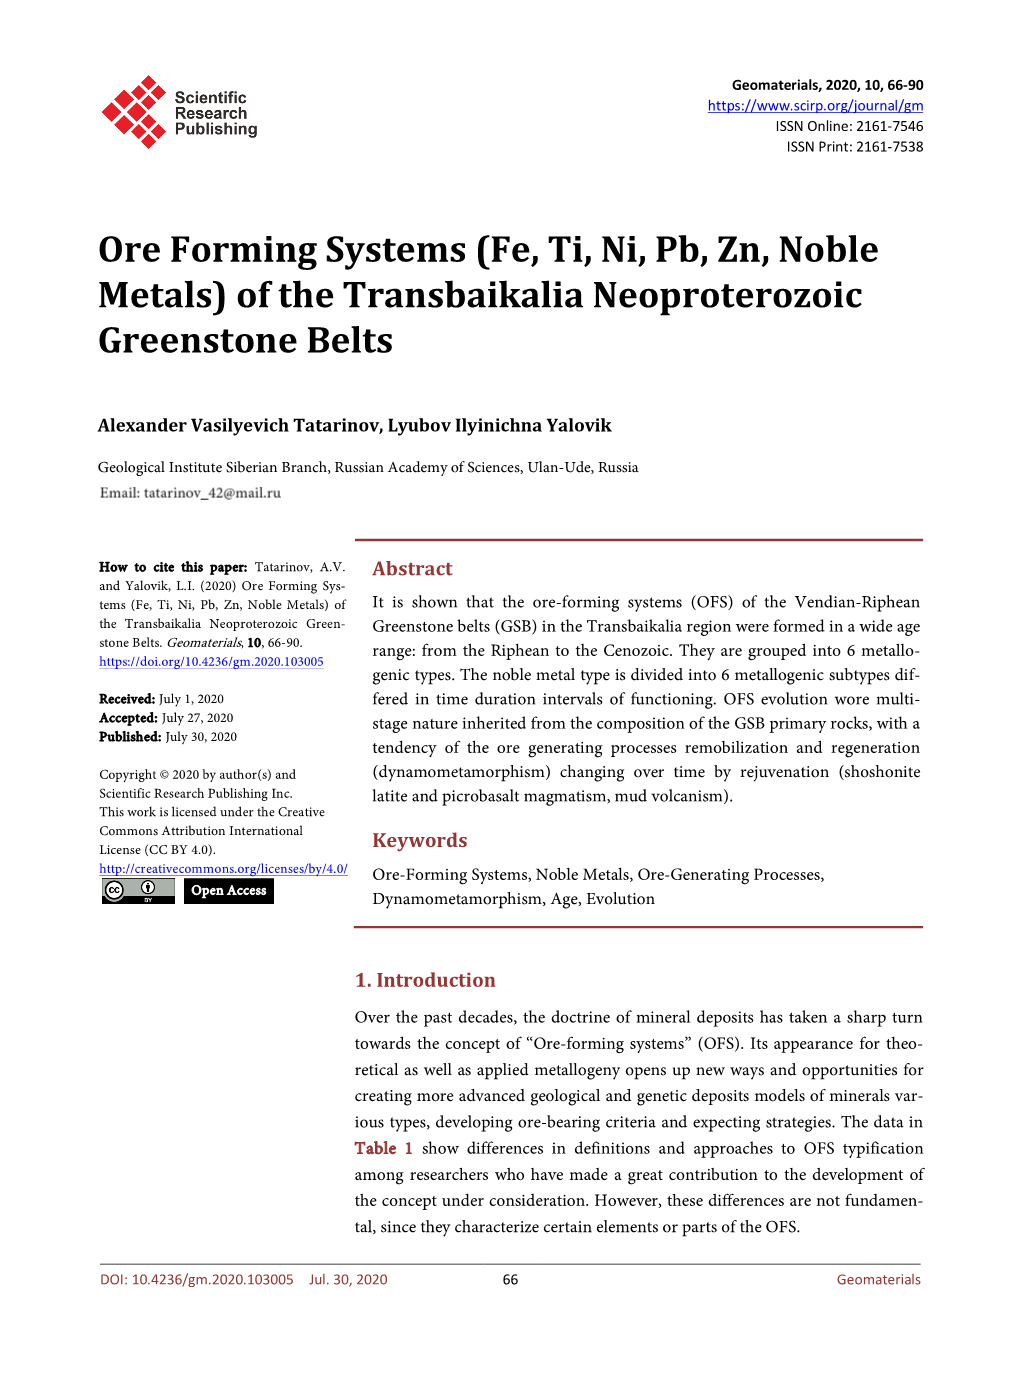 Ore Forming Systems (Fe, Ti, Ni, Pb, Zn, Noble Metals) of the Transbaikalia Neoproterozoic Greenstone Belts